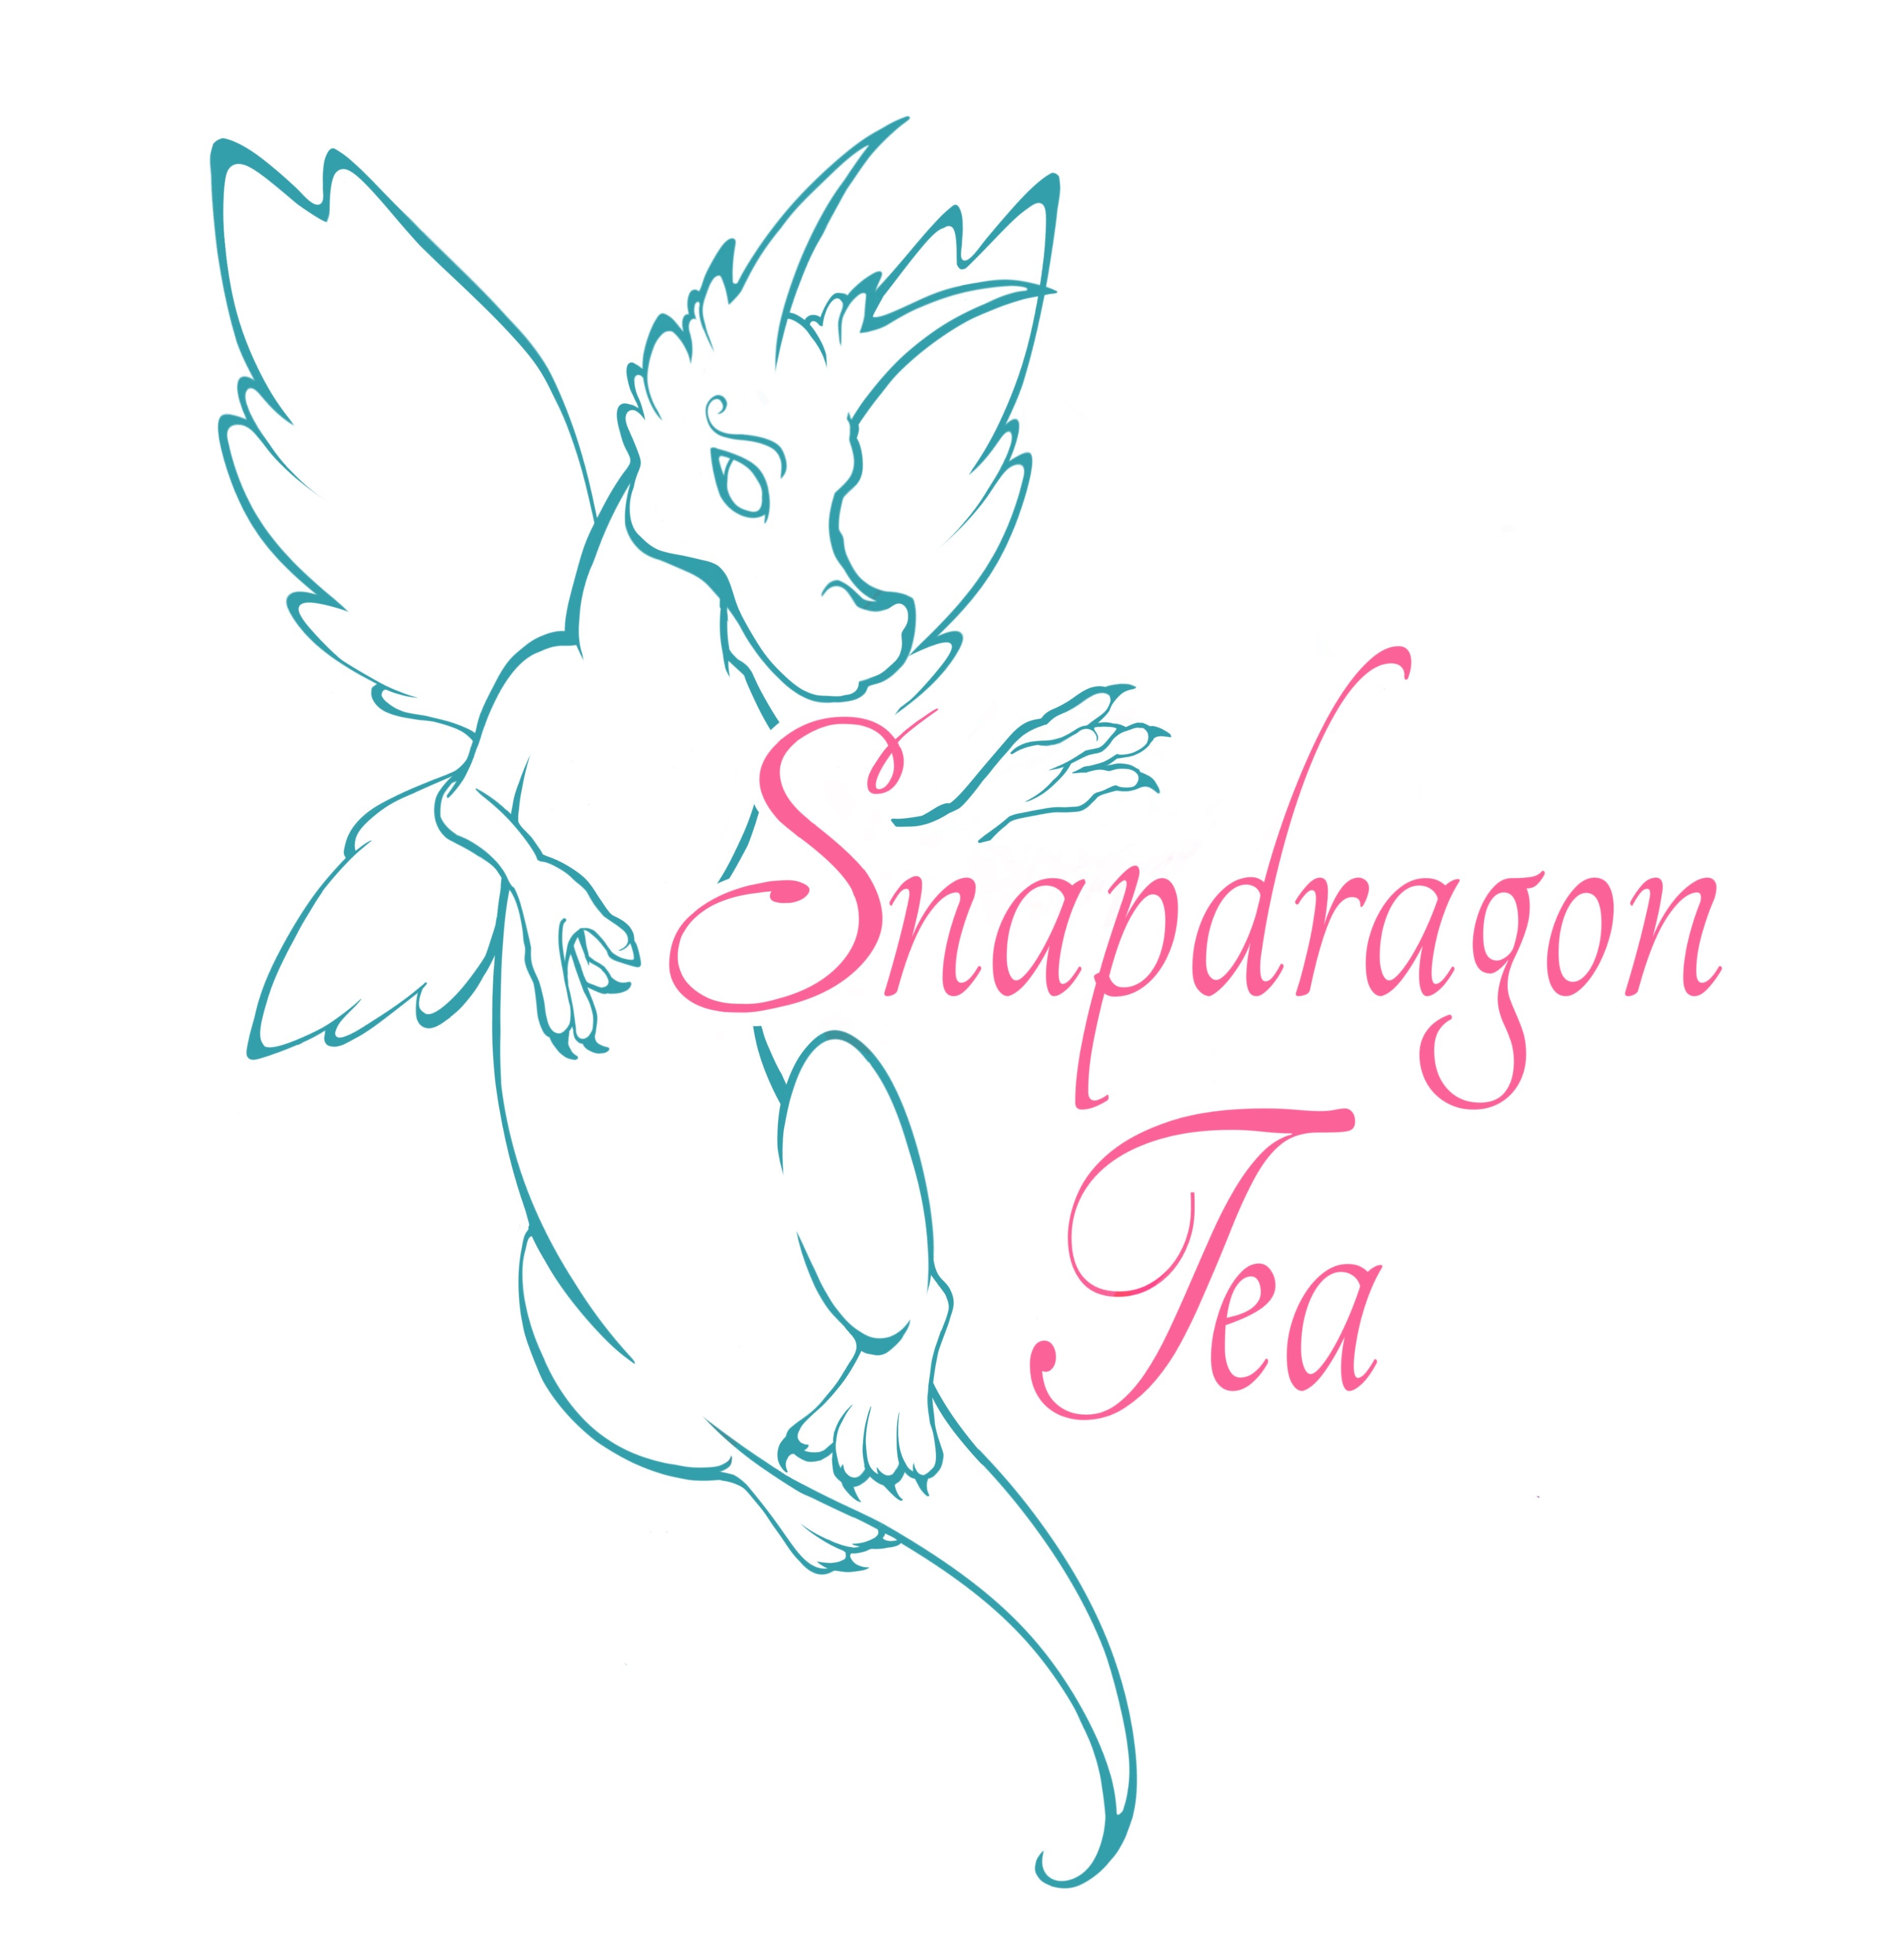 Snapdragon Tea